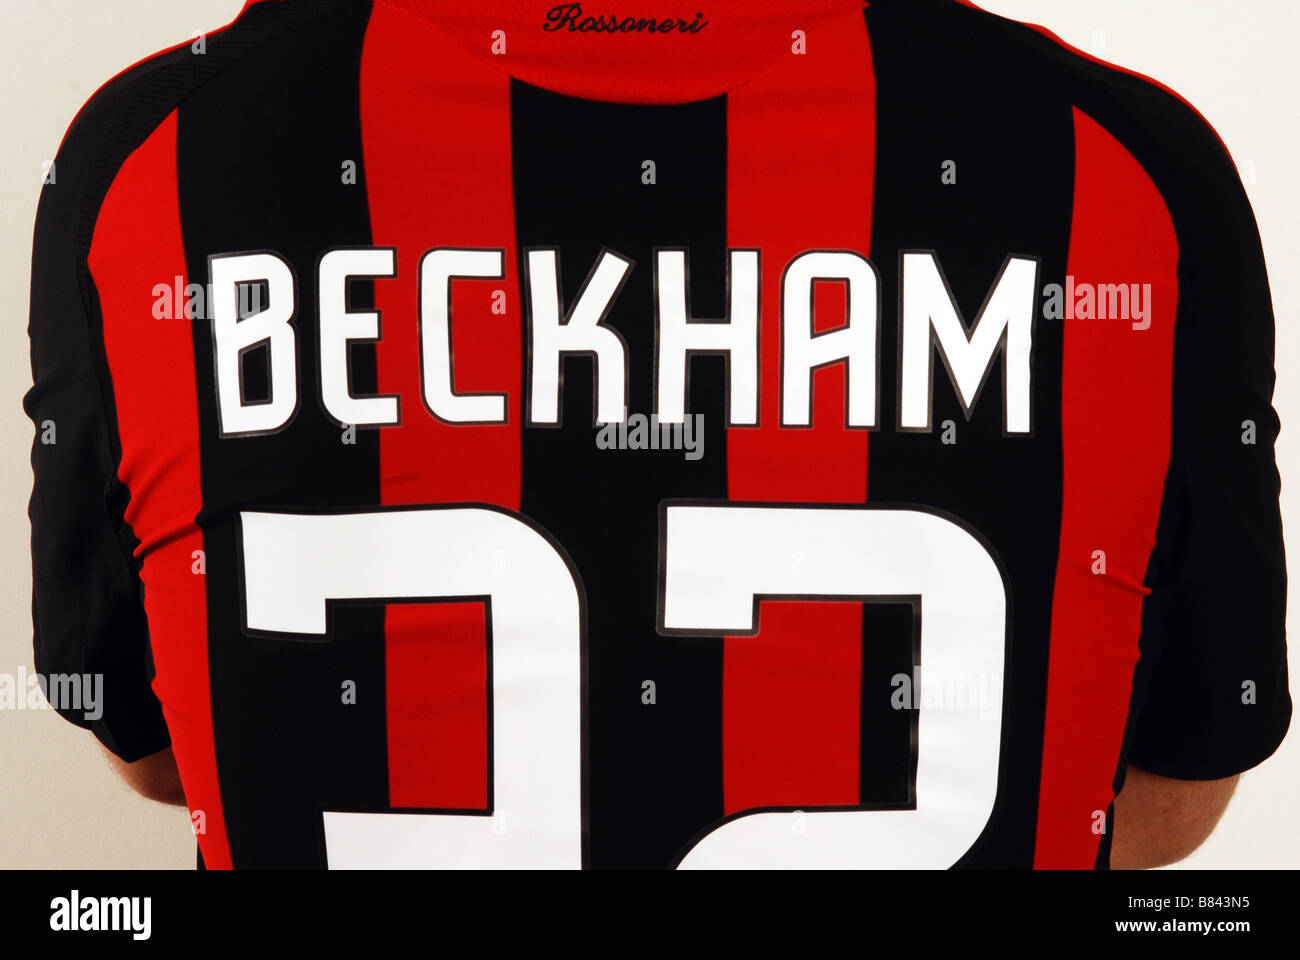 Beckham 32 Stock Photo